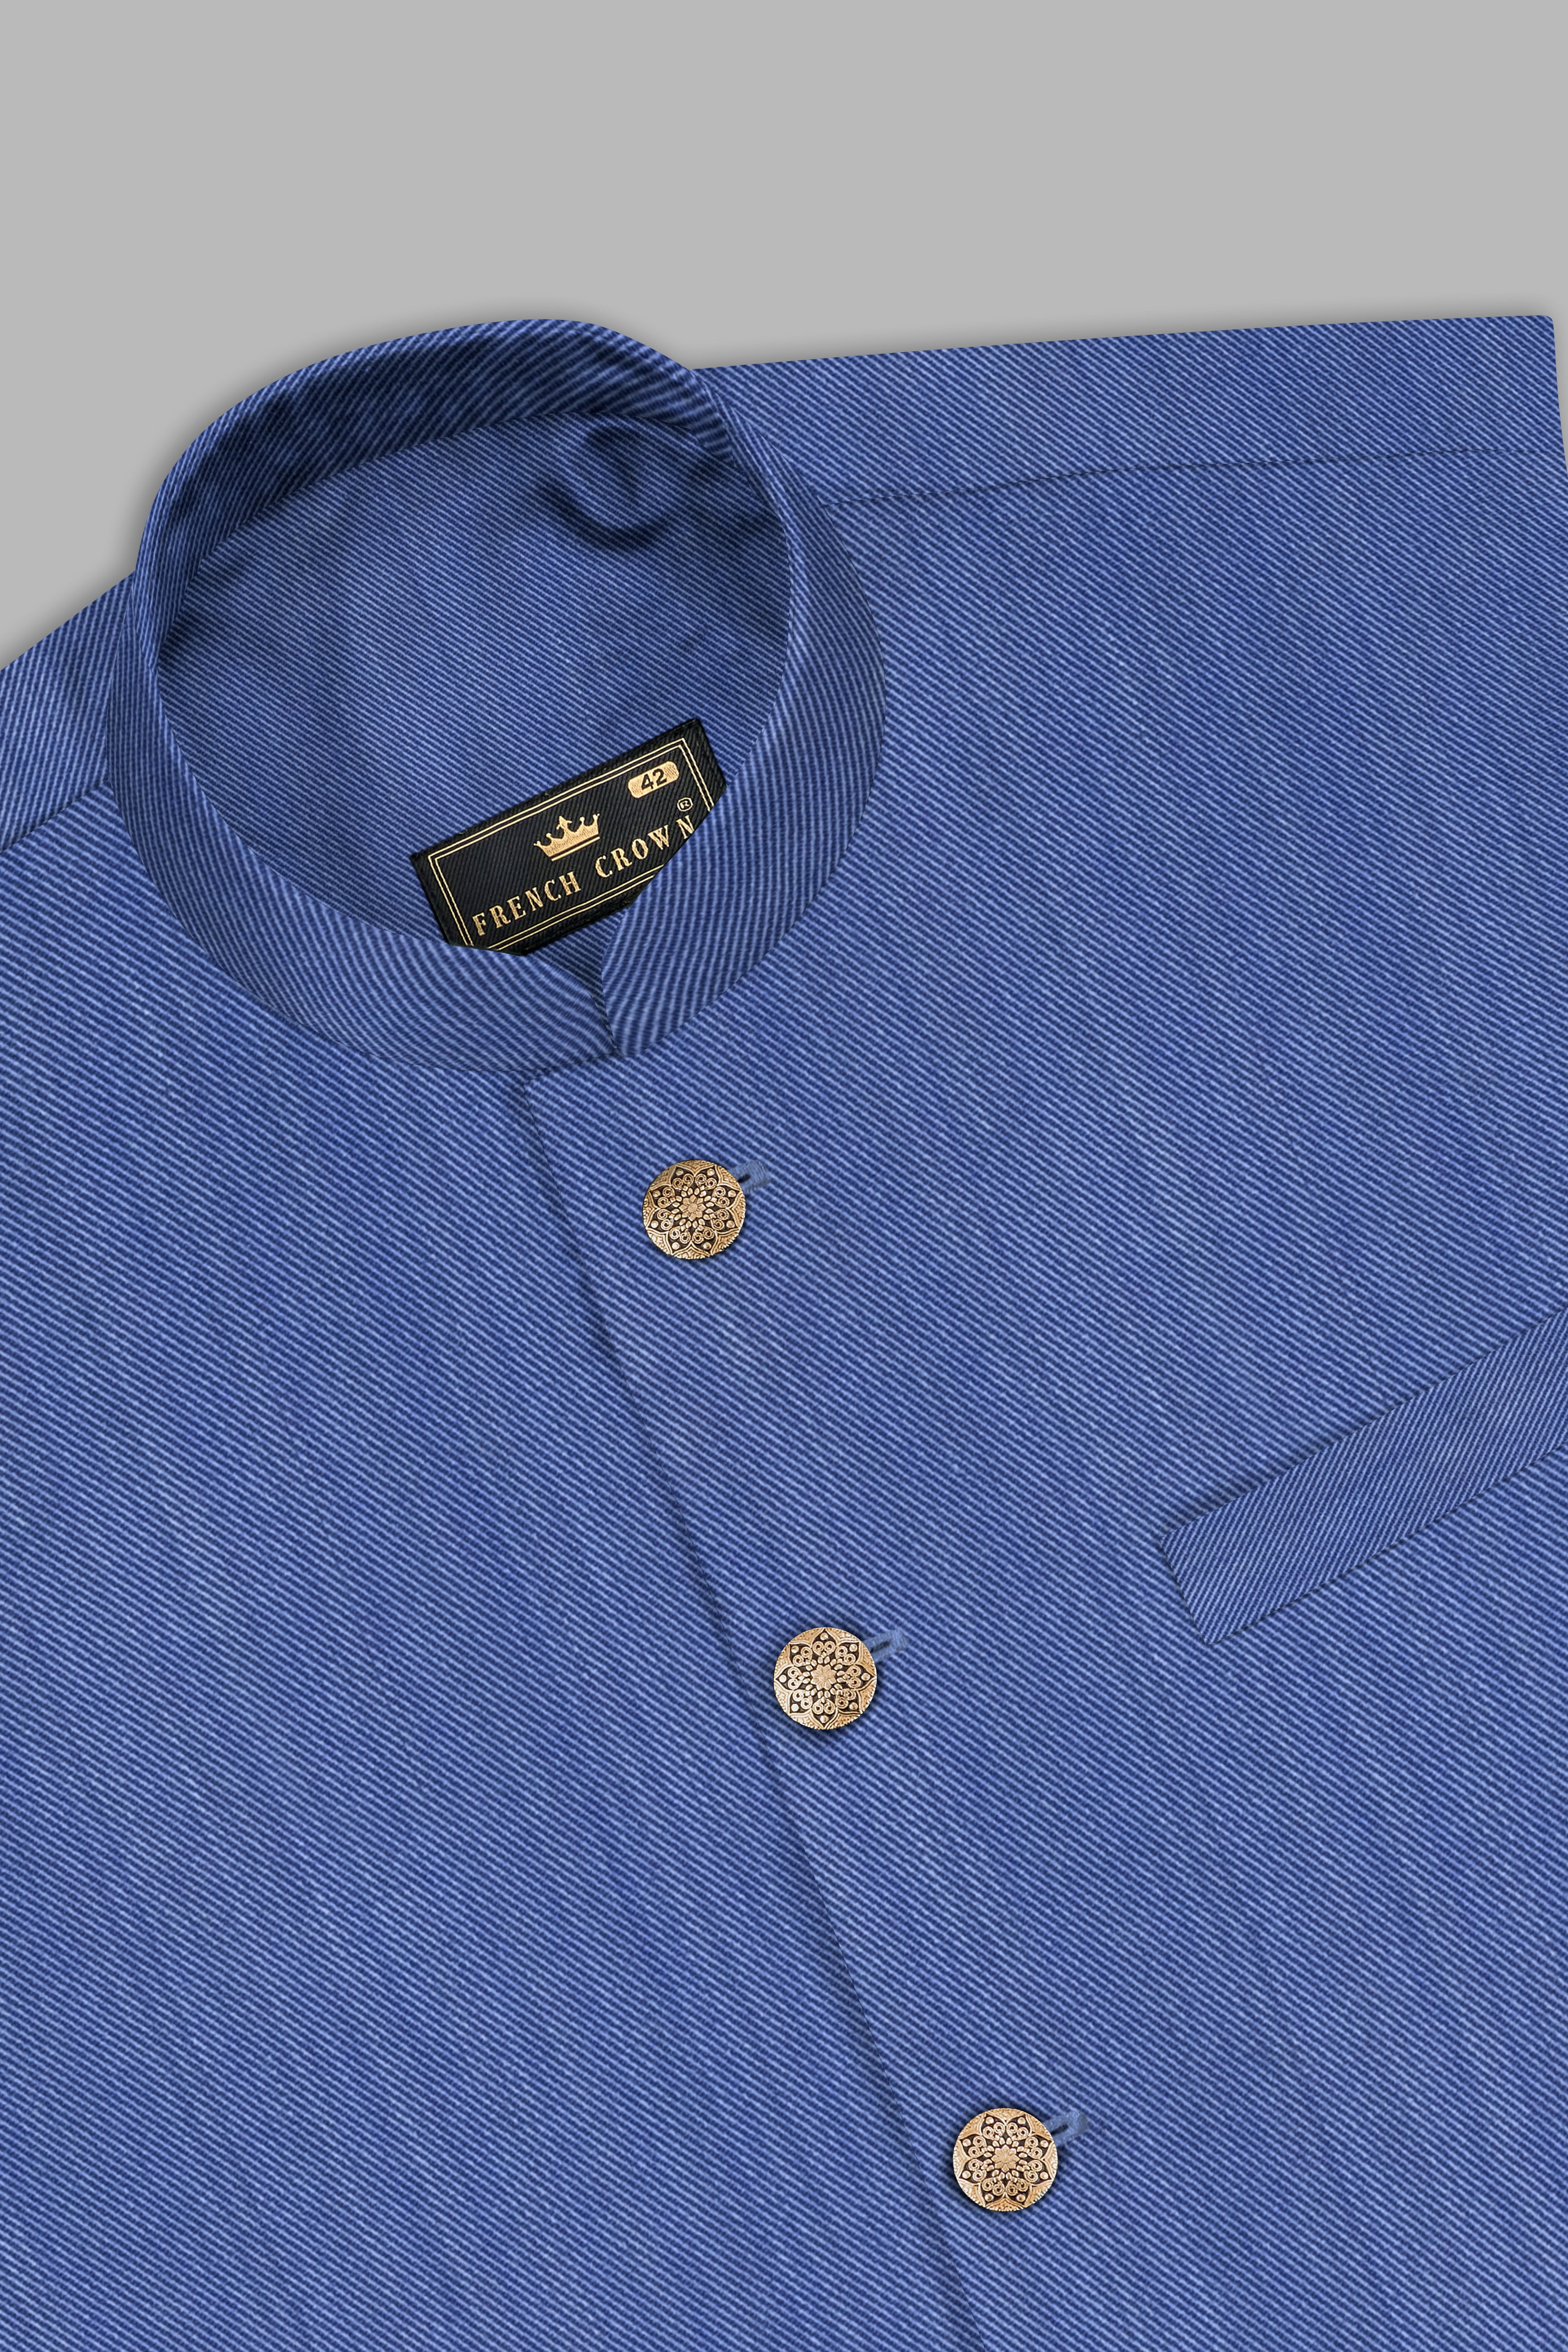 Twilight Blue Premium Cotton Cross Placket Bandhgala Nehru Jacket